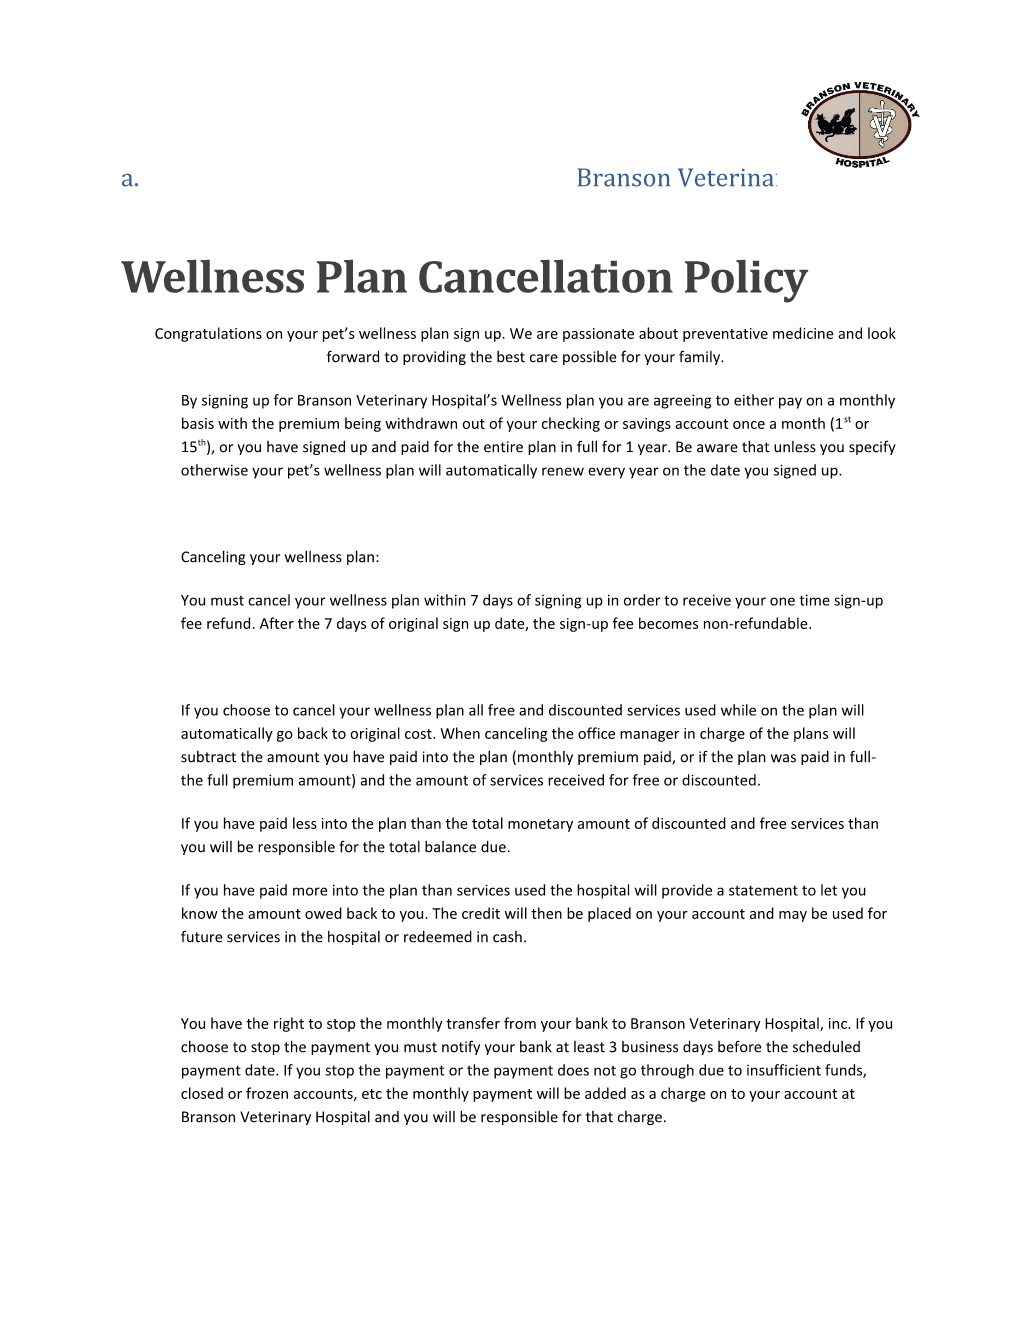 Wellness Plan Cancellation Policy